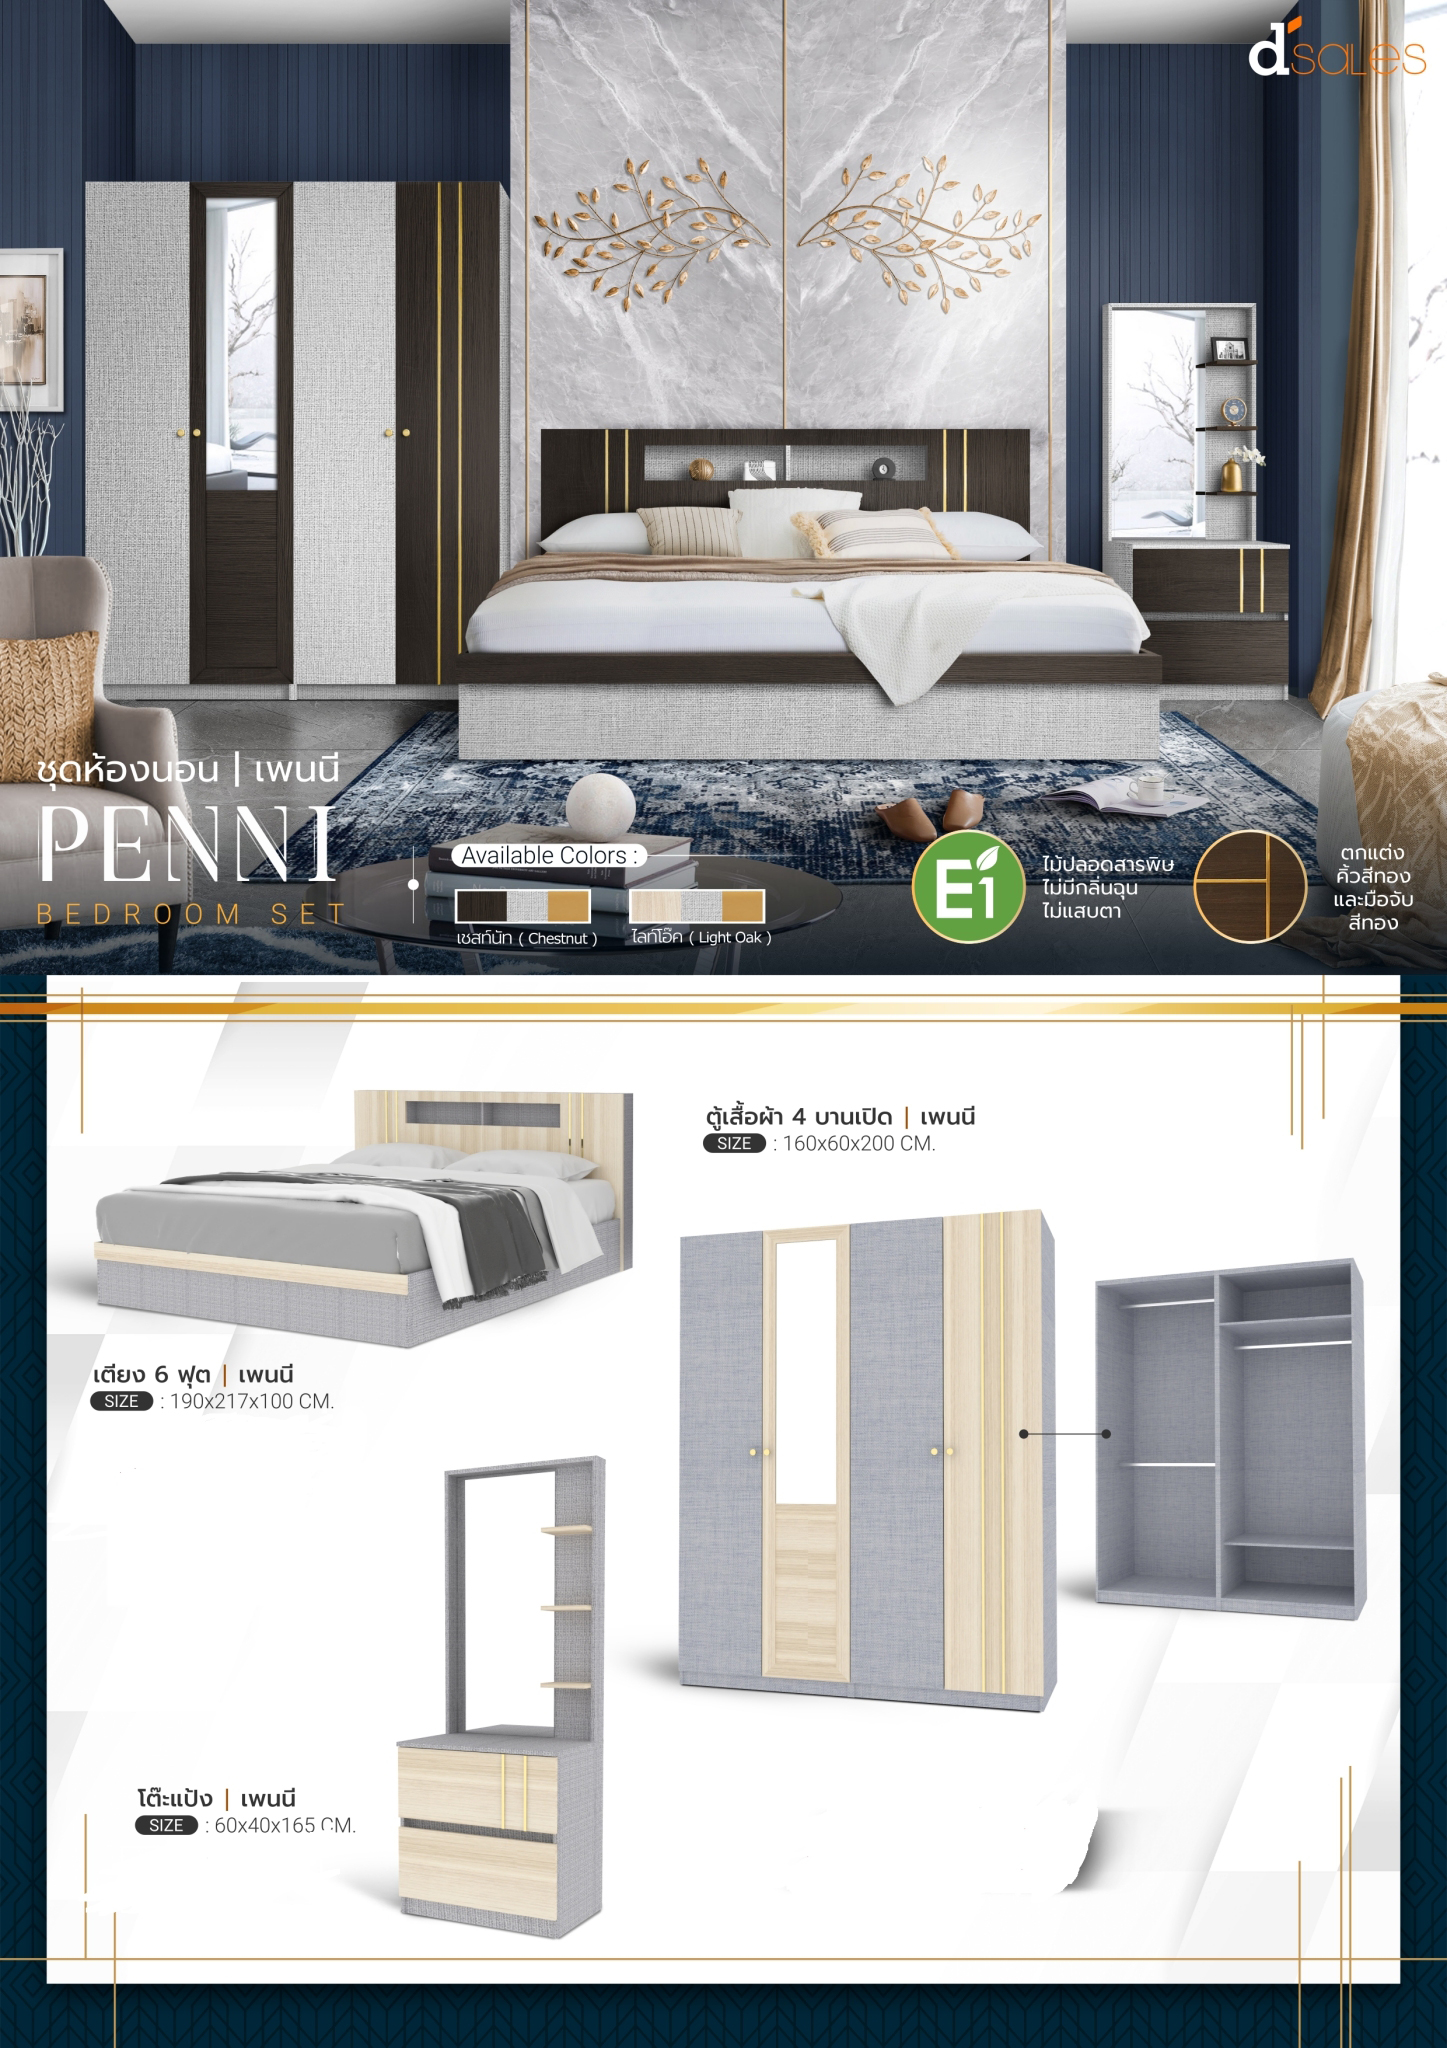 95011::PENNI-4::ชุดห้องนอน เตียง 6ฟุต ตู้เสื้อผ้า 4บานเปิด โต๊ะแป้ง เอสต้าร์ ชุดห้องนอน